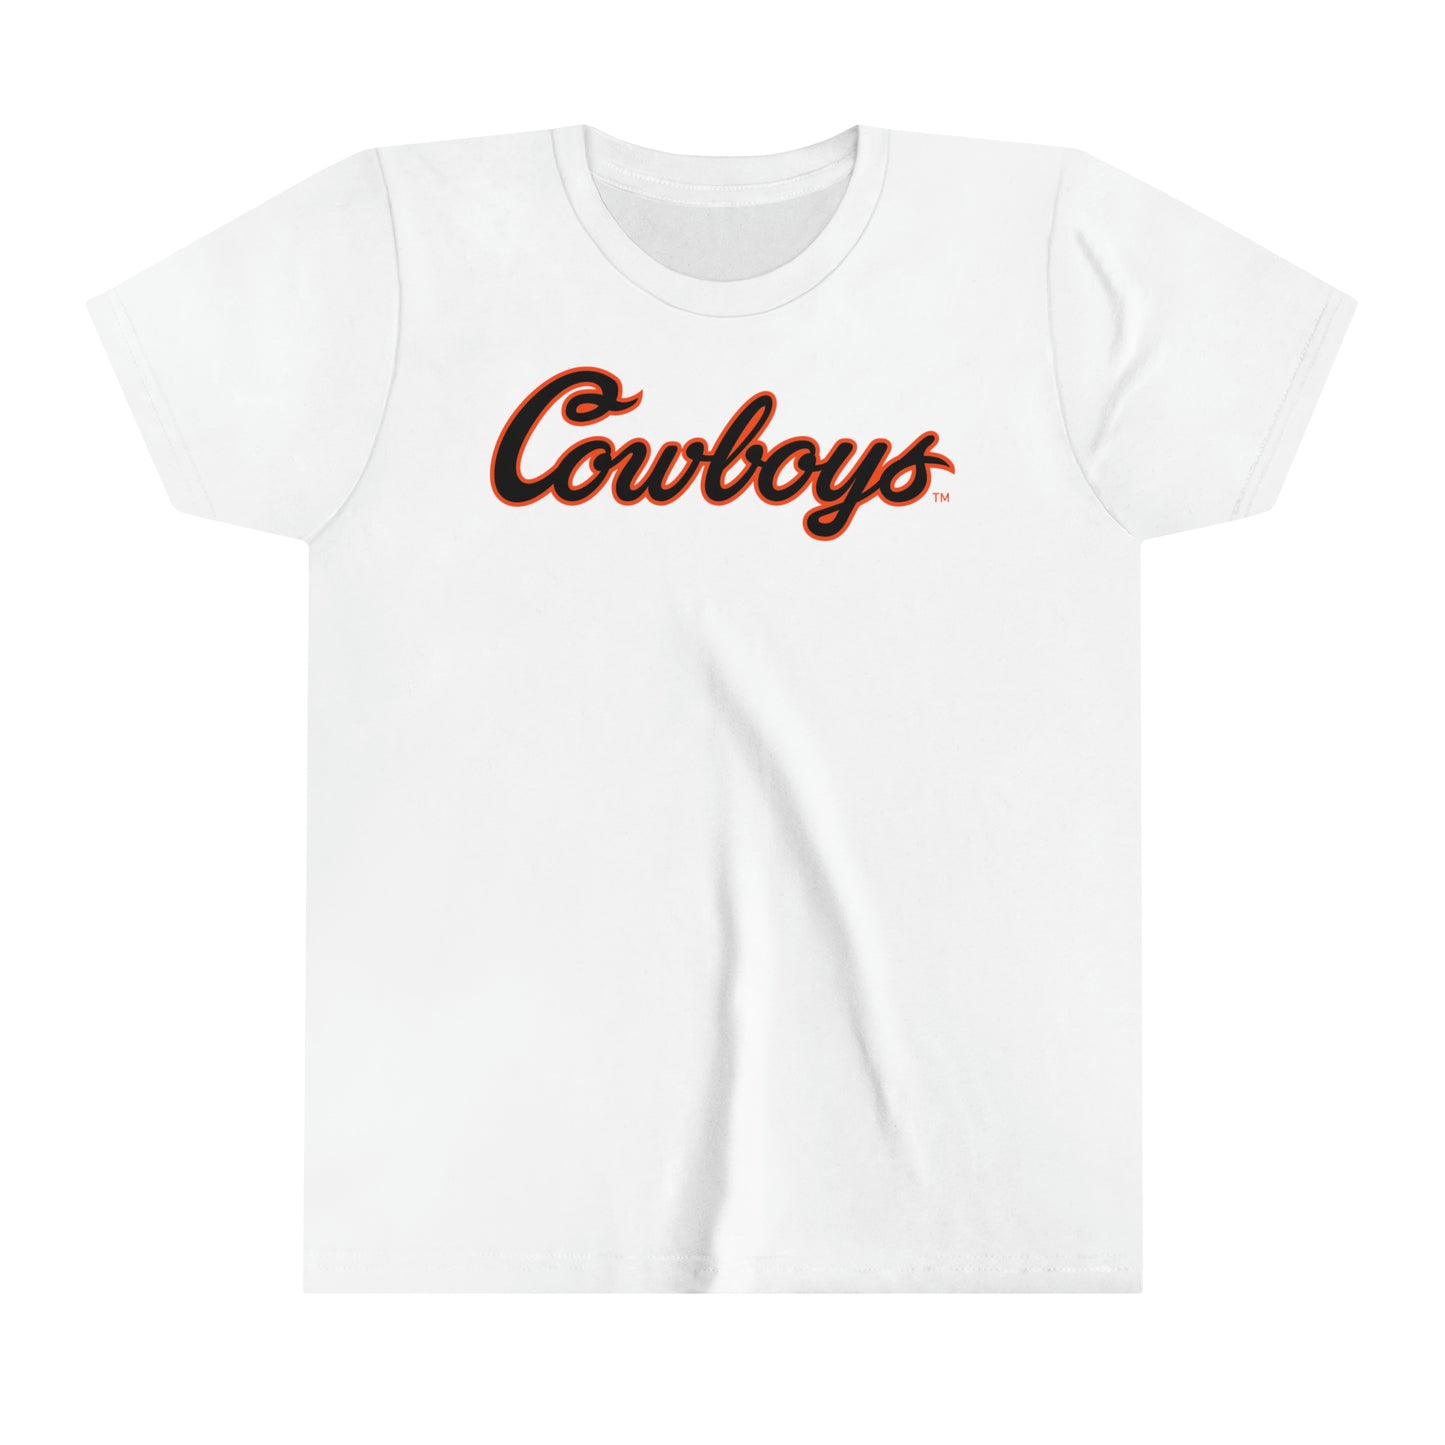 Jake Schultz #38 Cursive Cowboys Youth T-Shirt